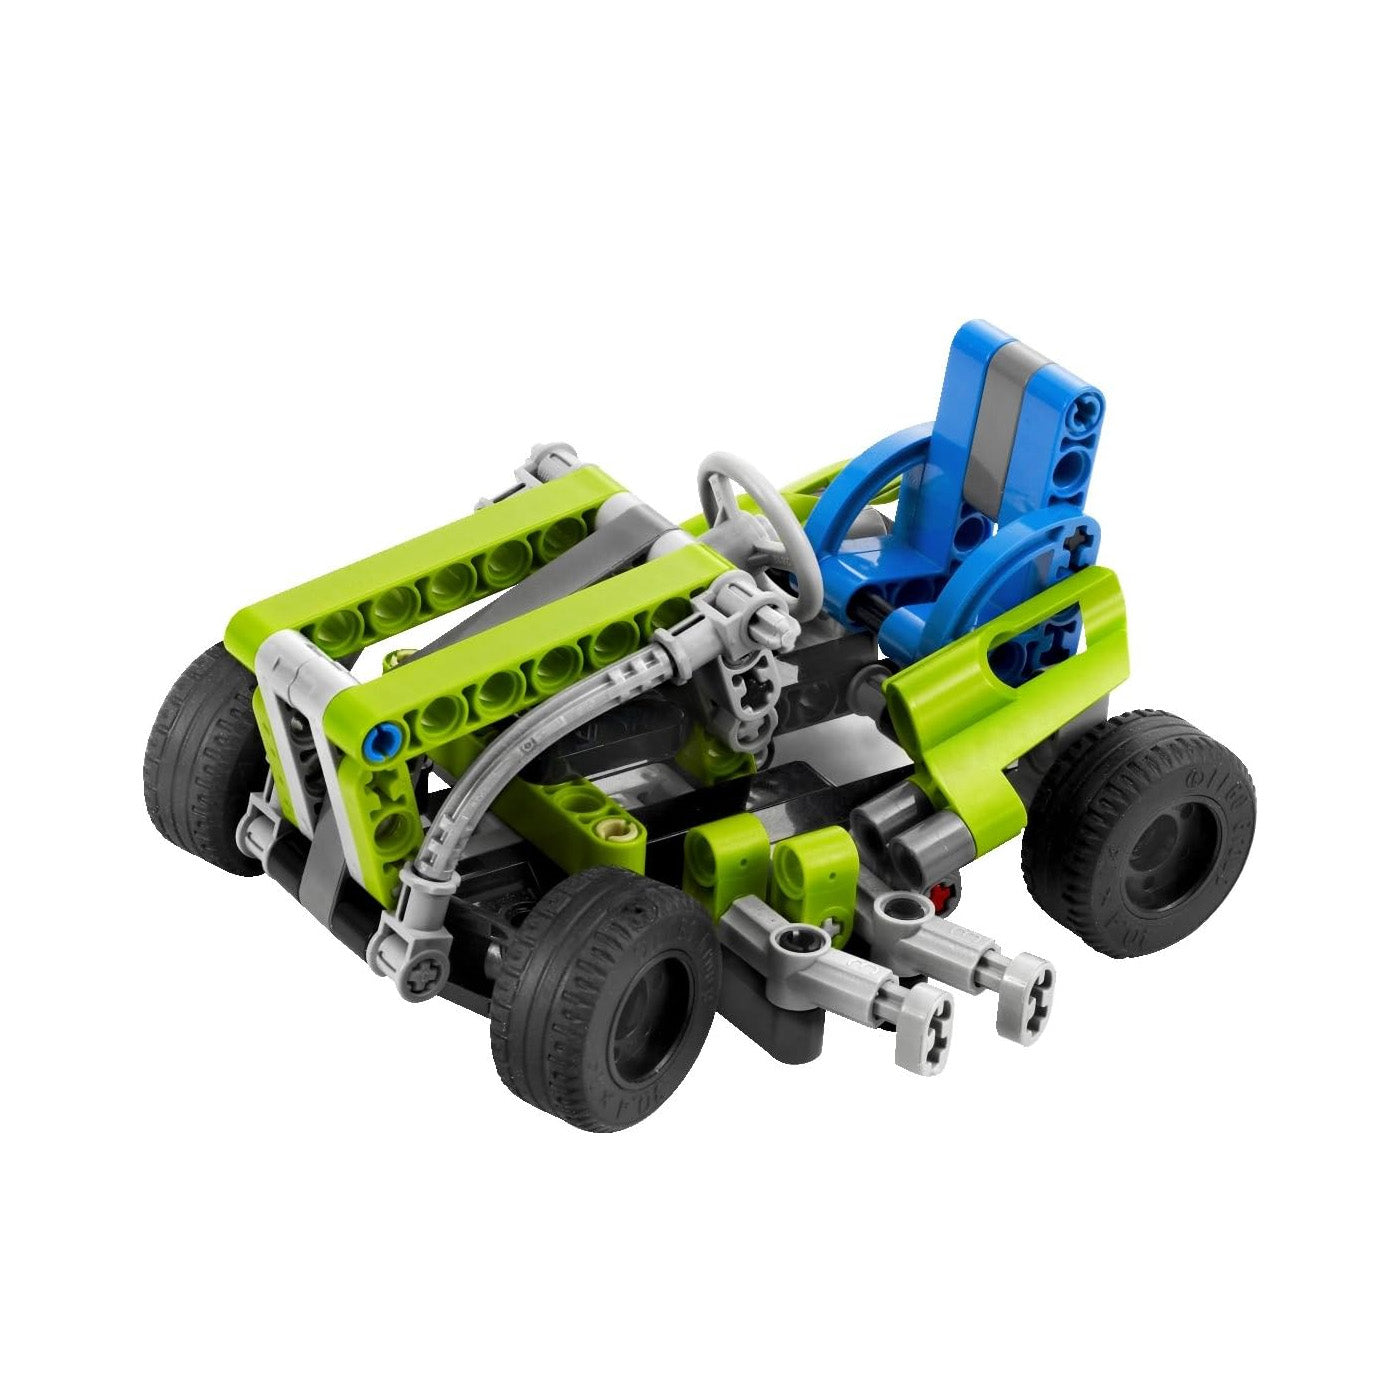 LEGO Technic: Go-Kart Set 8256